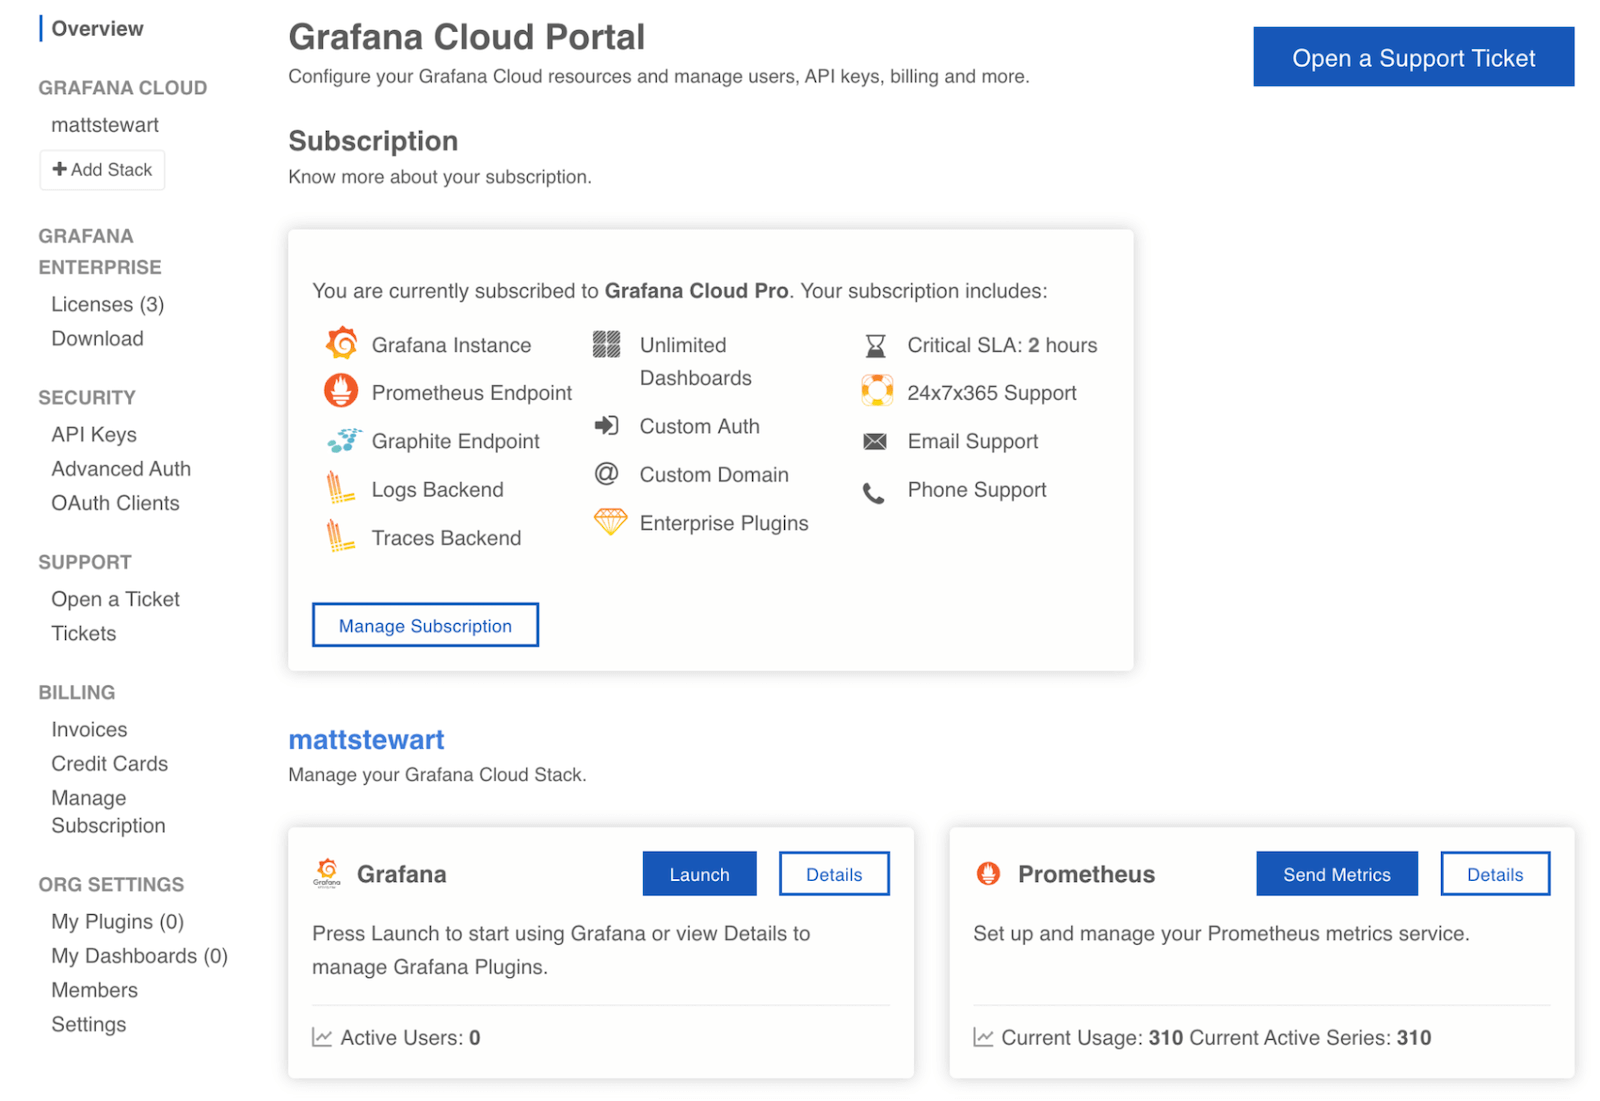 The Grafana Cloud Portal